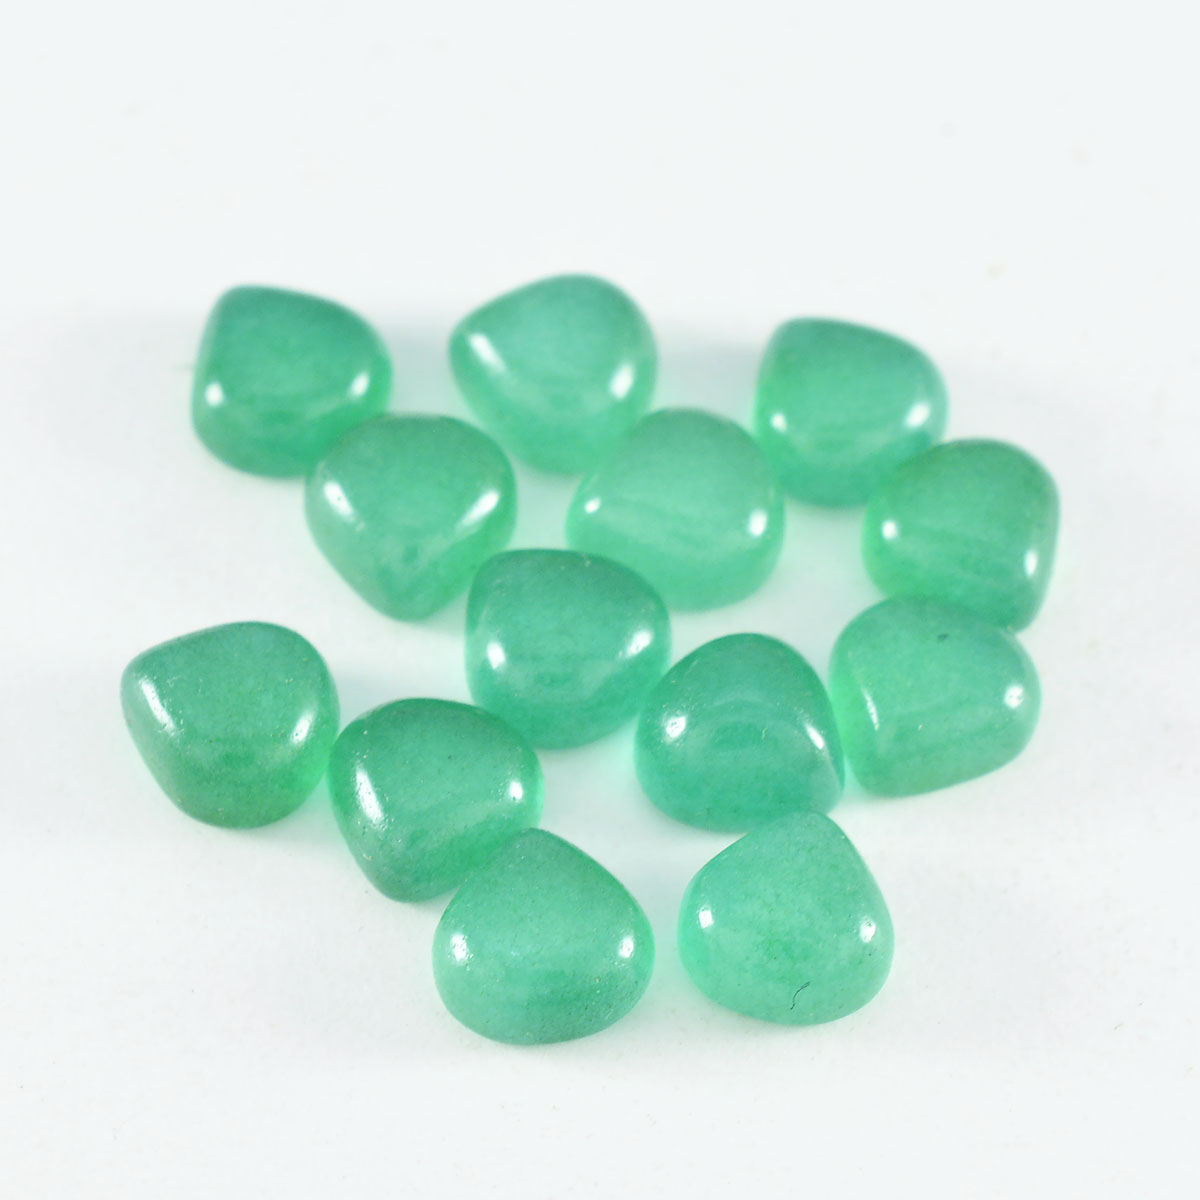 Riyogems 1PC Green Onyx Cabochon 7x7 mm Heart Shape handsome Quality Loose Gemstone